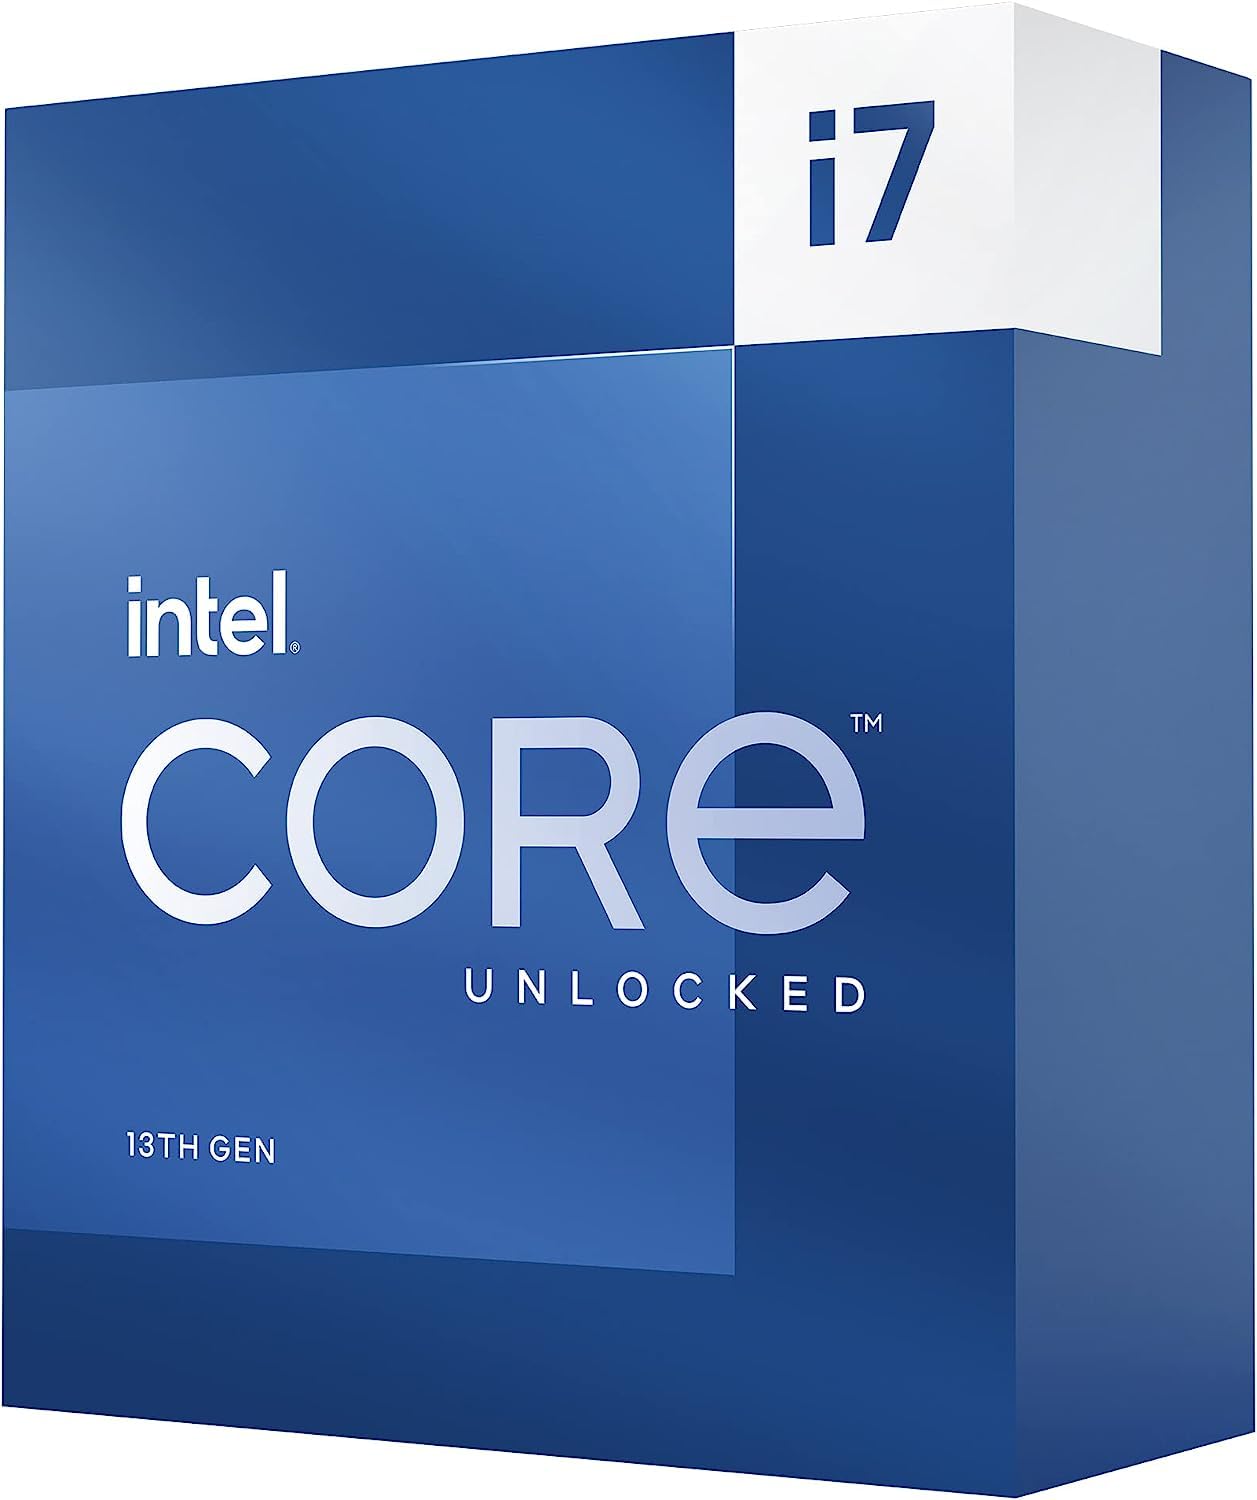 Intel Core i7-13700K Gaming Desktop Processor $345 + Free Shipping